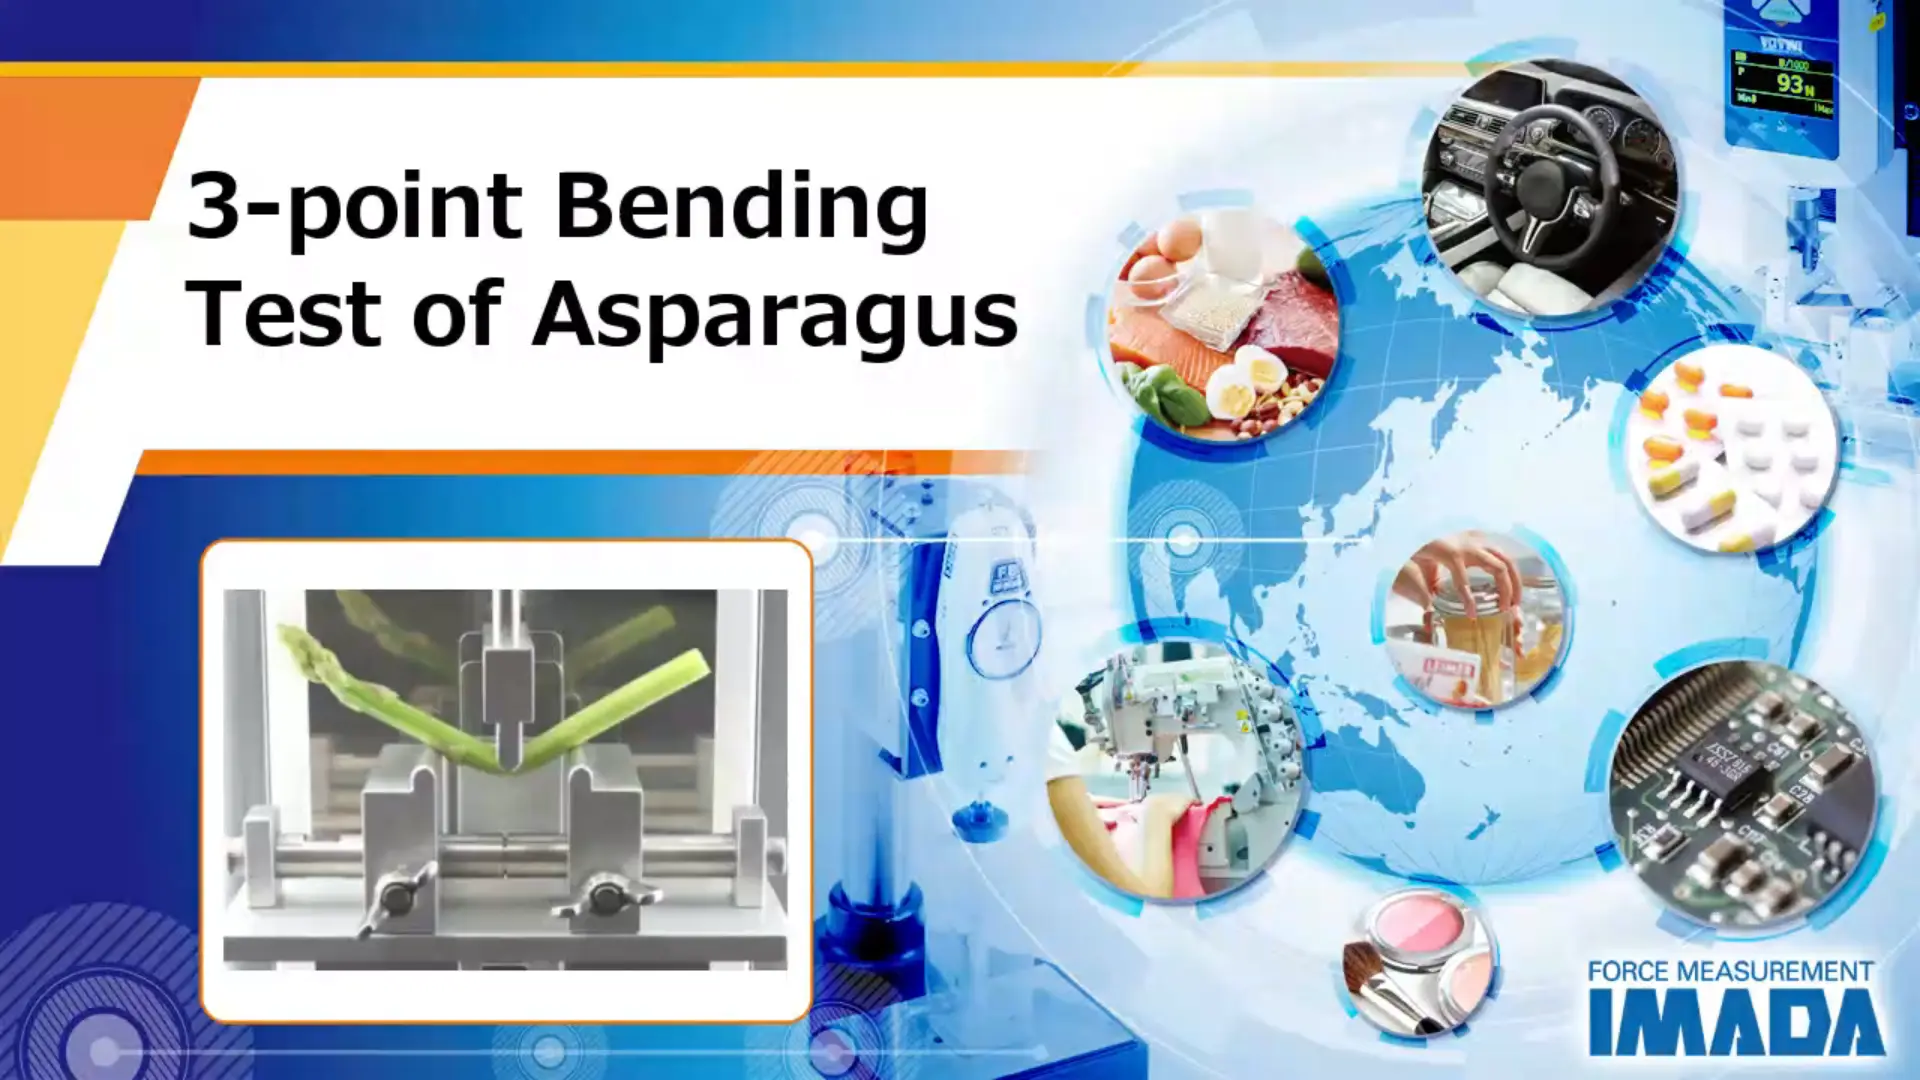 3-point Bending Test of Asparagus